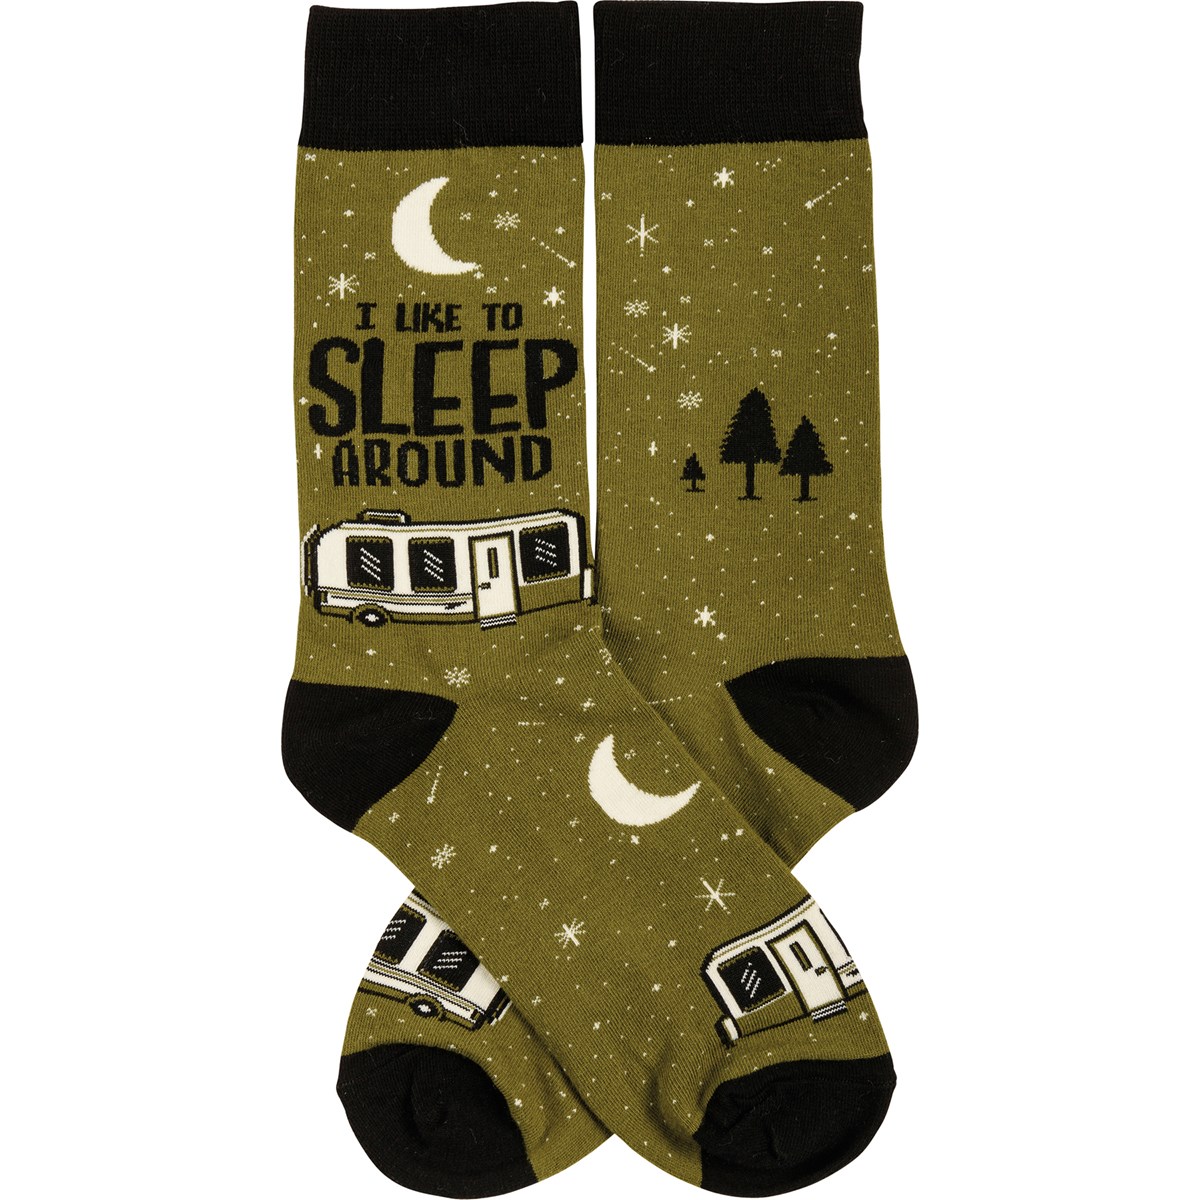 I Like To Sleep Around Socks - Cotton, Nylon, Spandex